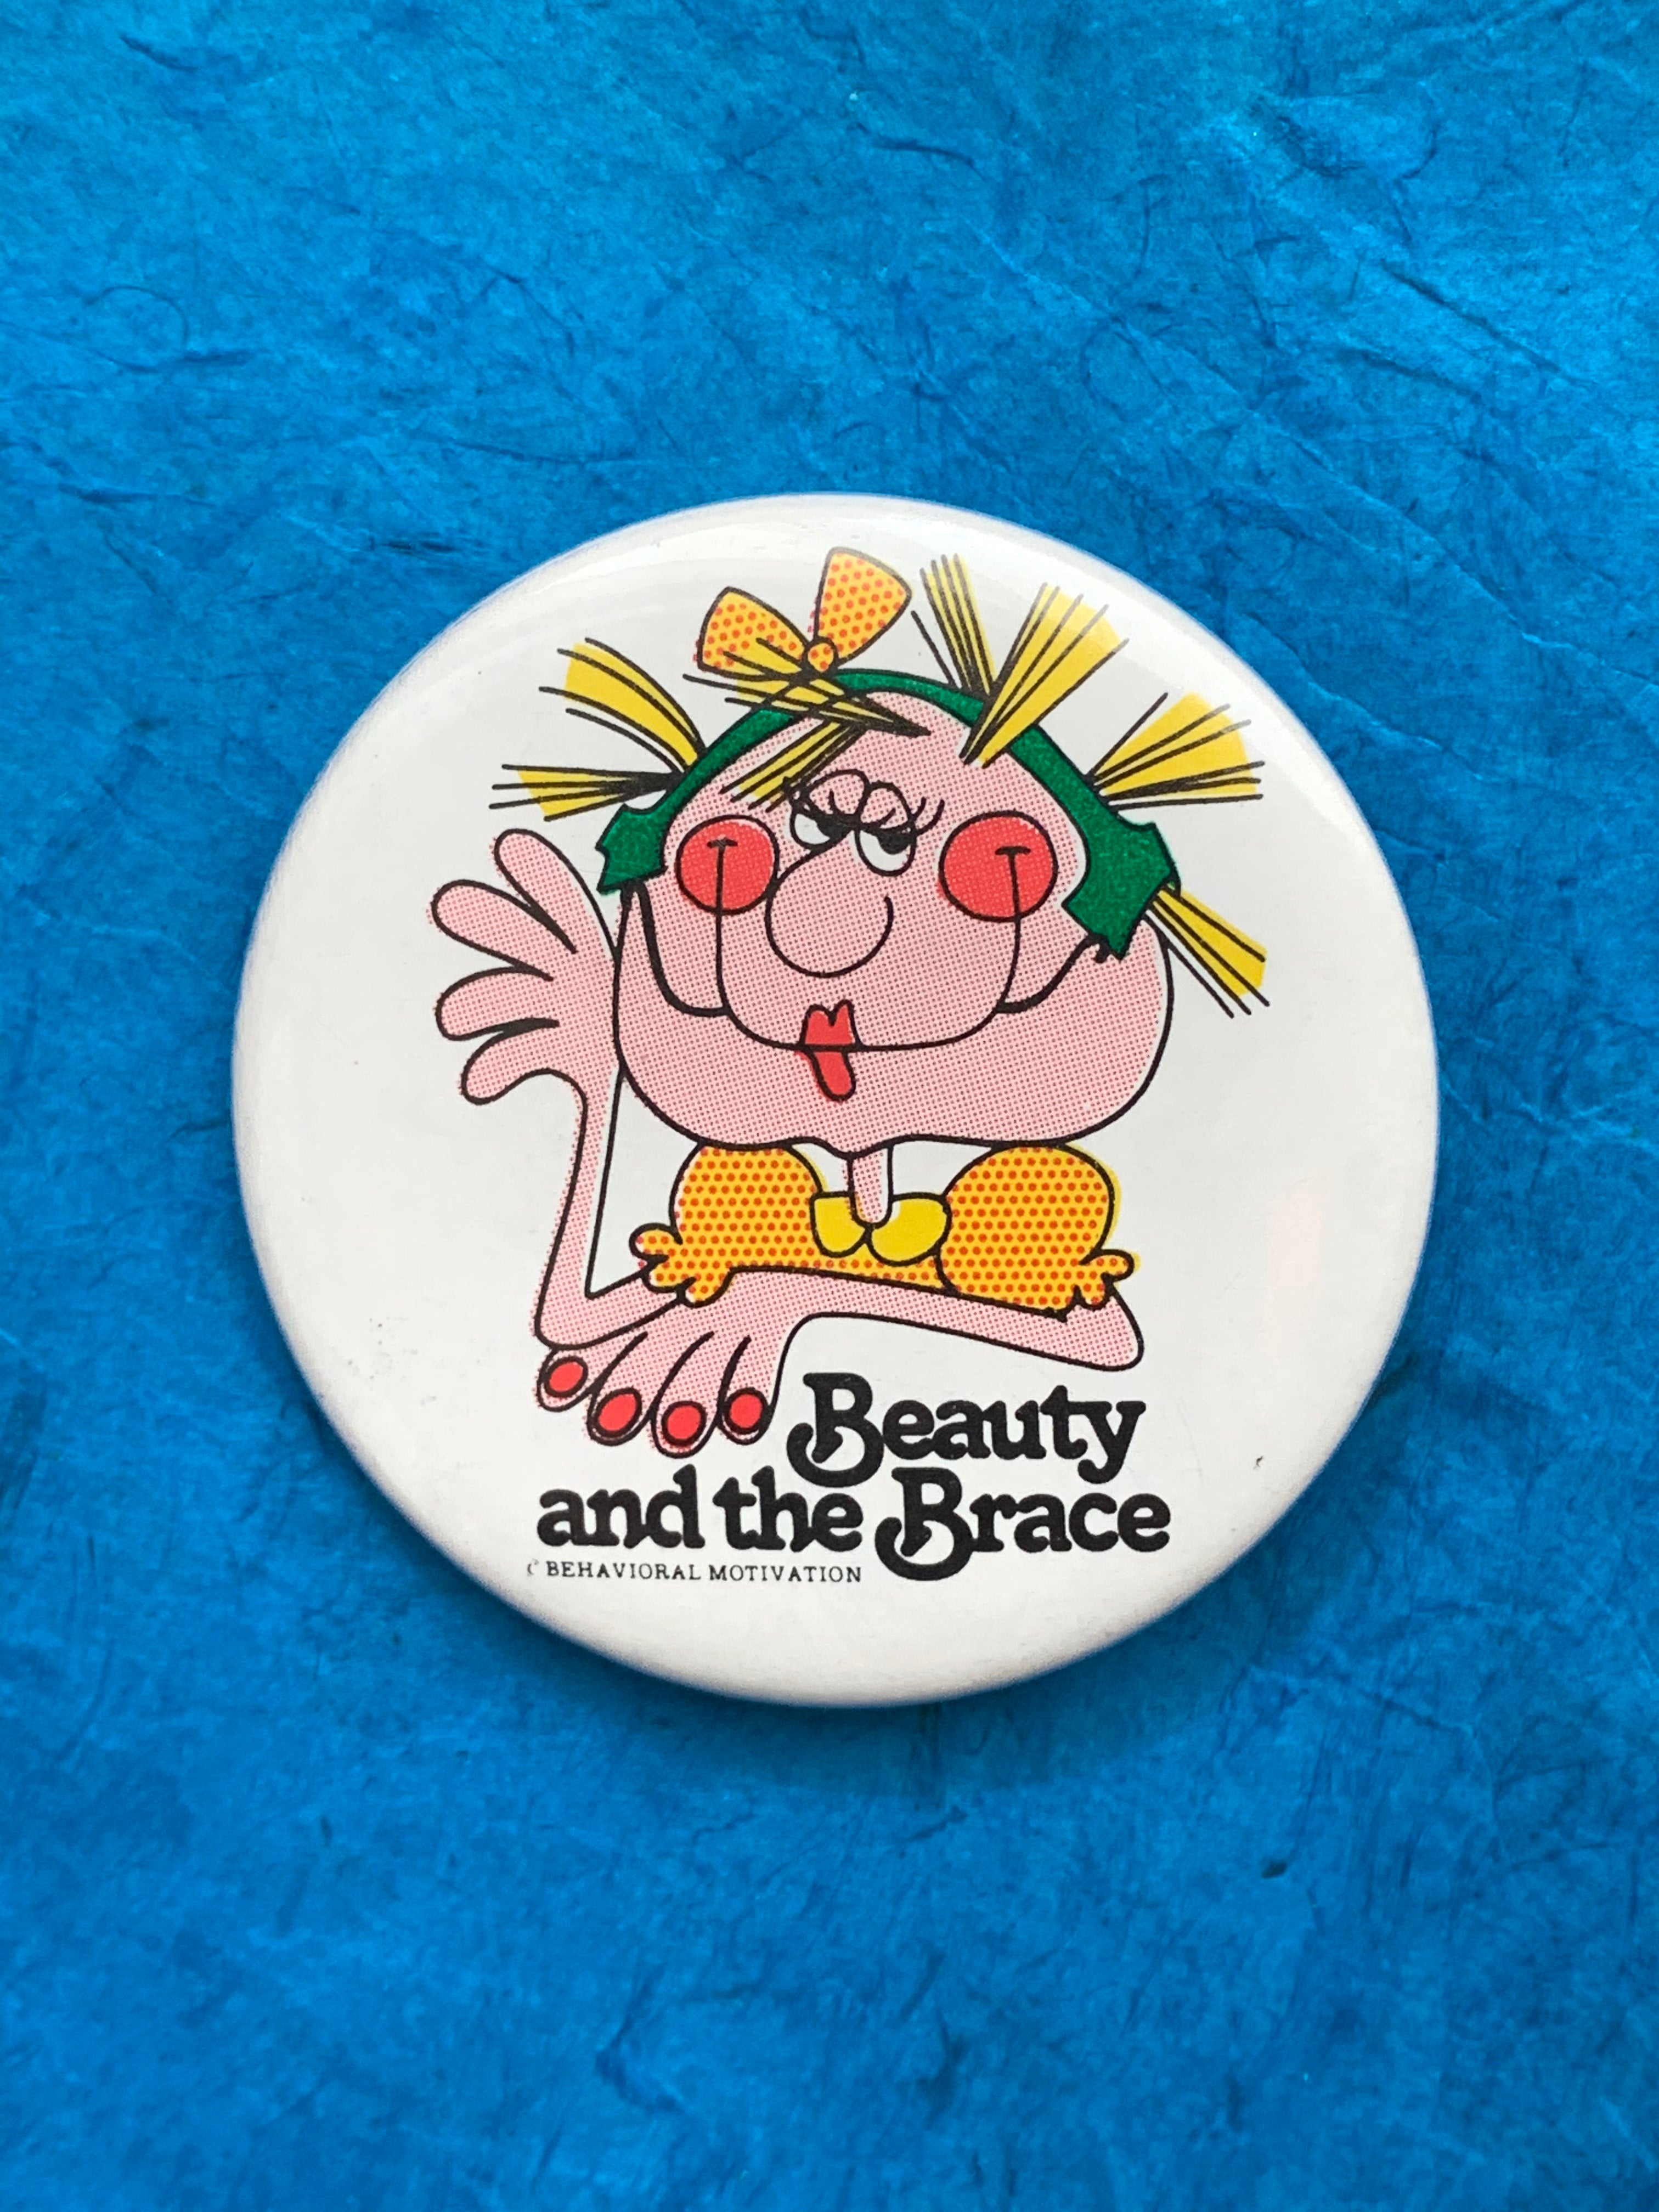 "Beauty and the Brace" Behavioral Motivation Retro Vintage Pinback Button Quirky Art